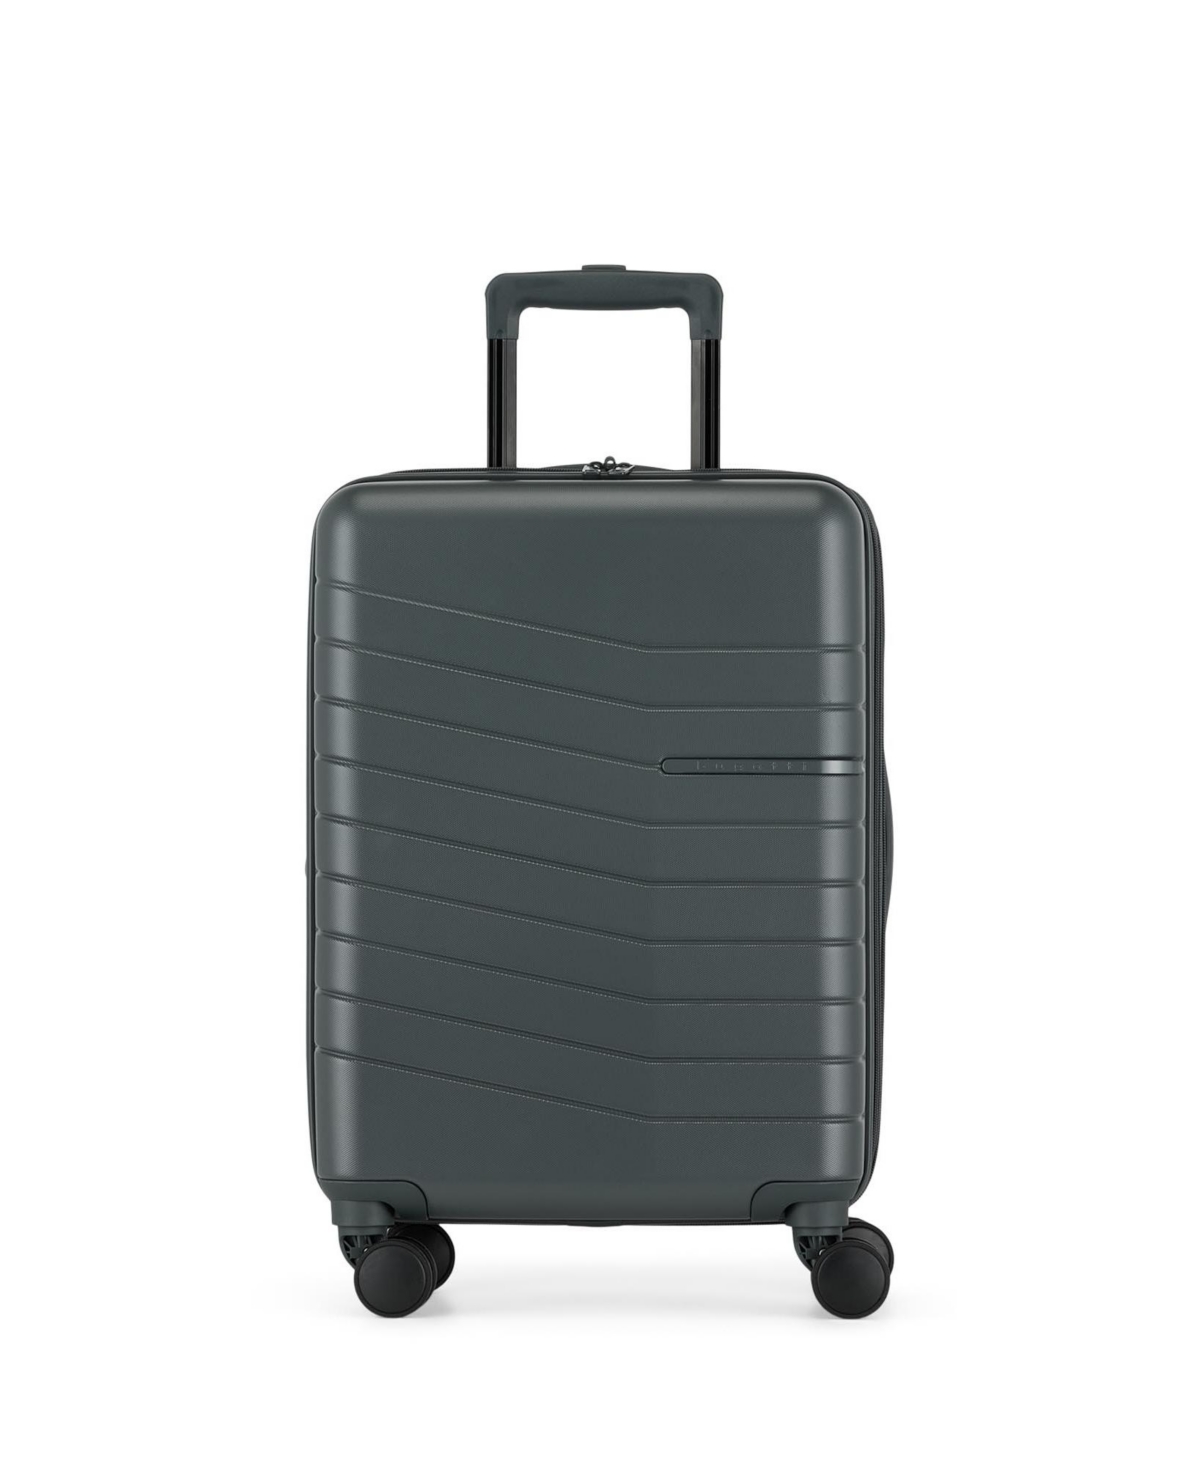 Bugatti Munich Carry-on Luggage In Gray